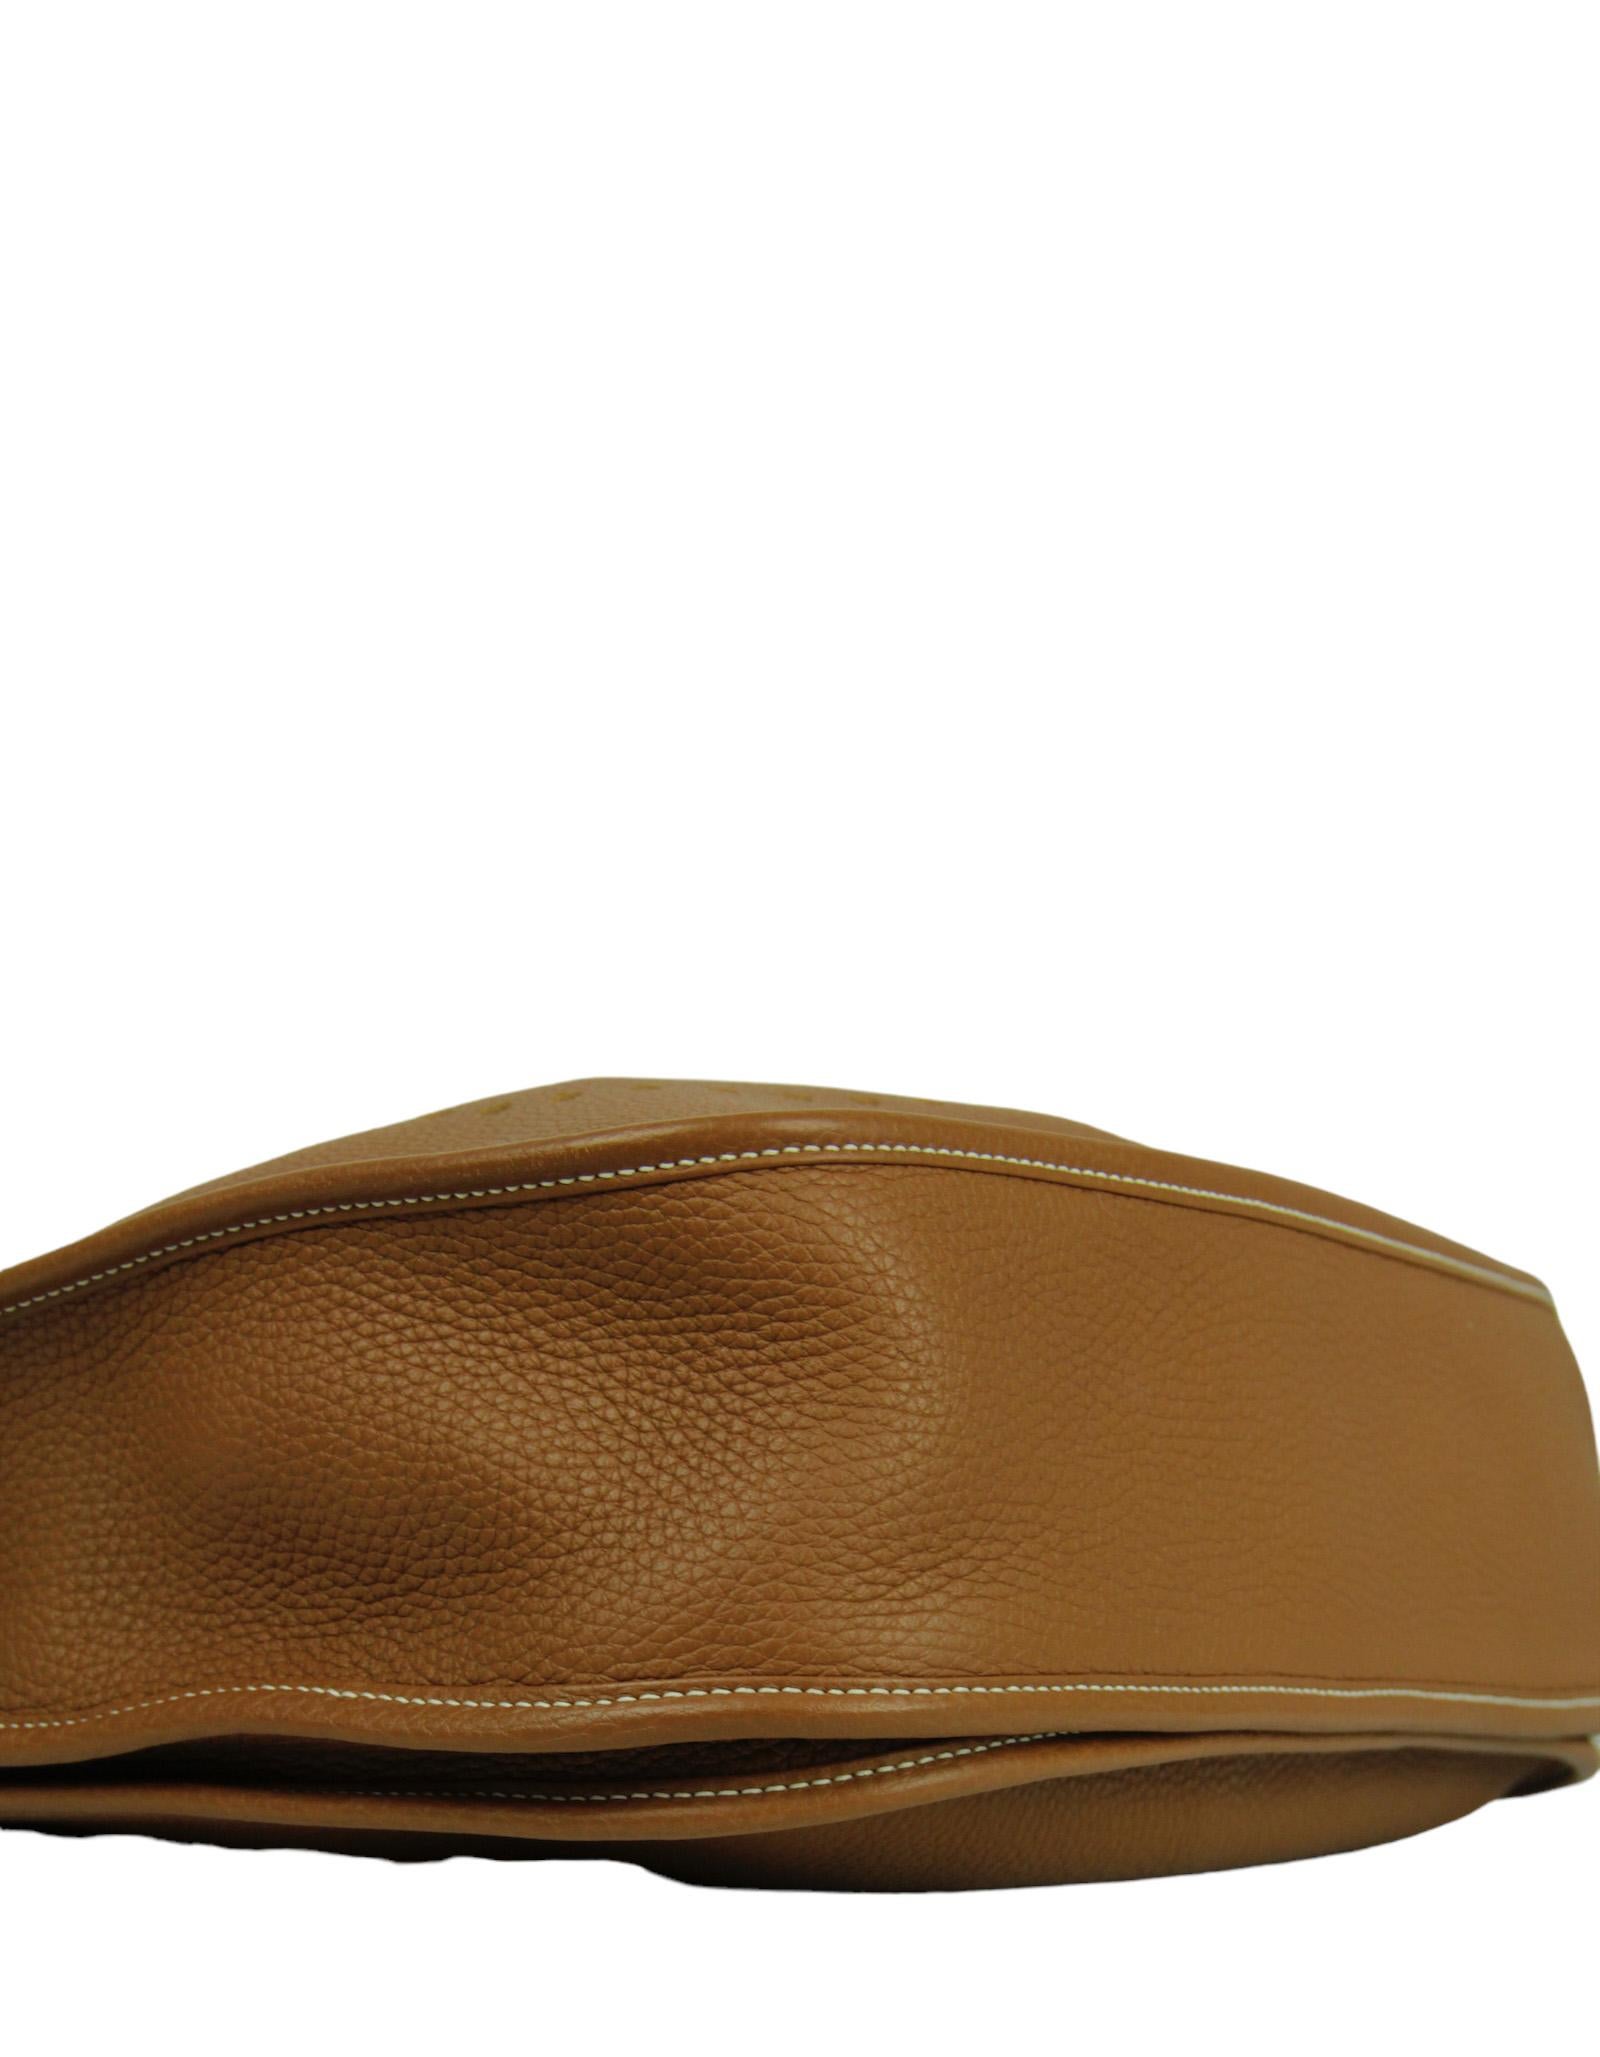 Hermes Gold Taurillon Clemence Leather Evelyne III GM Messenger Bag For Sale 1